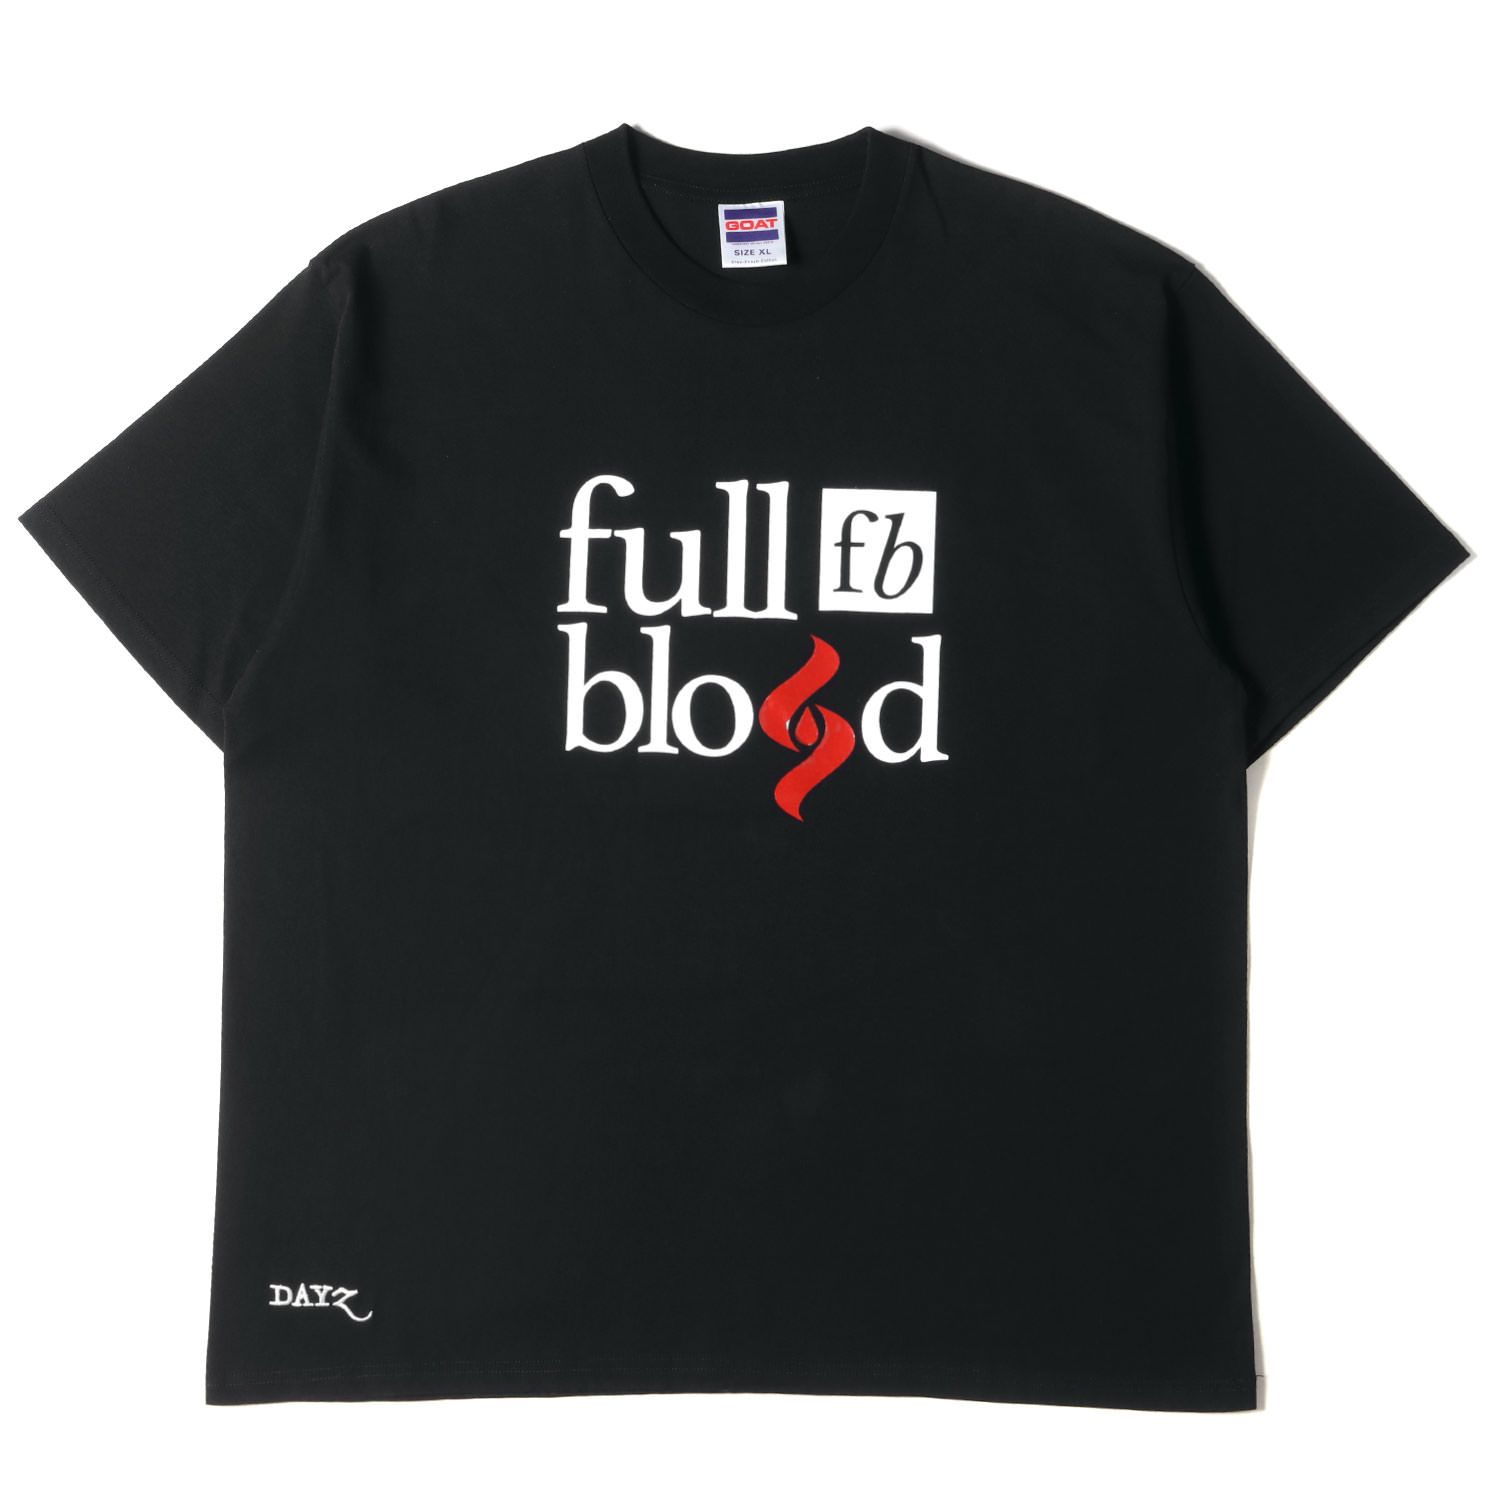 RATS FULL BLOOD T-SHIRT  XL